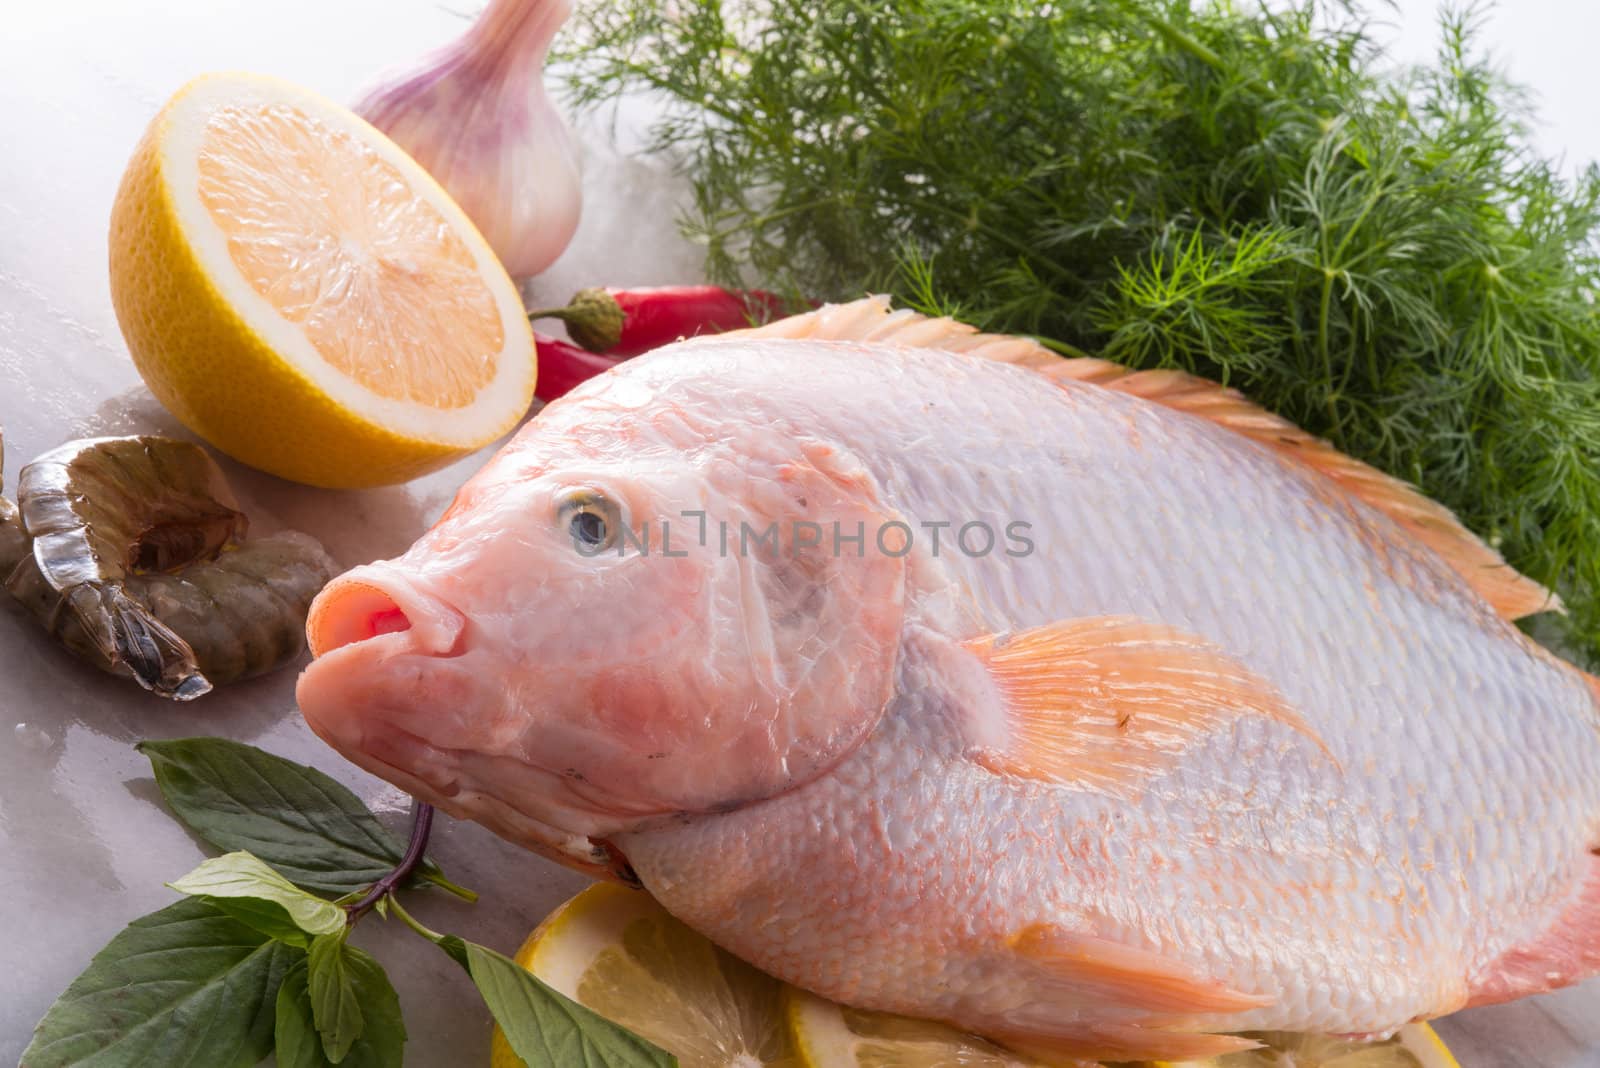 Freshness reddens the Nile Tilapia fish (Oreochromis niloticus) by Darius.Dzinnik